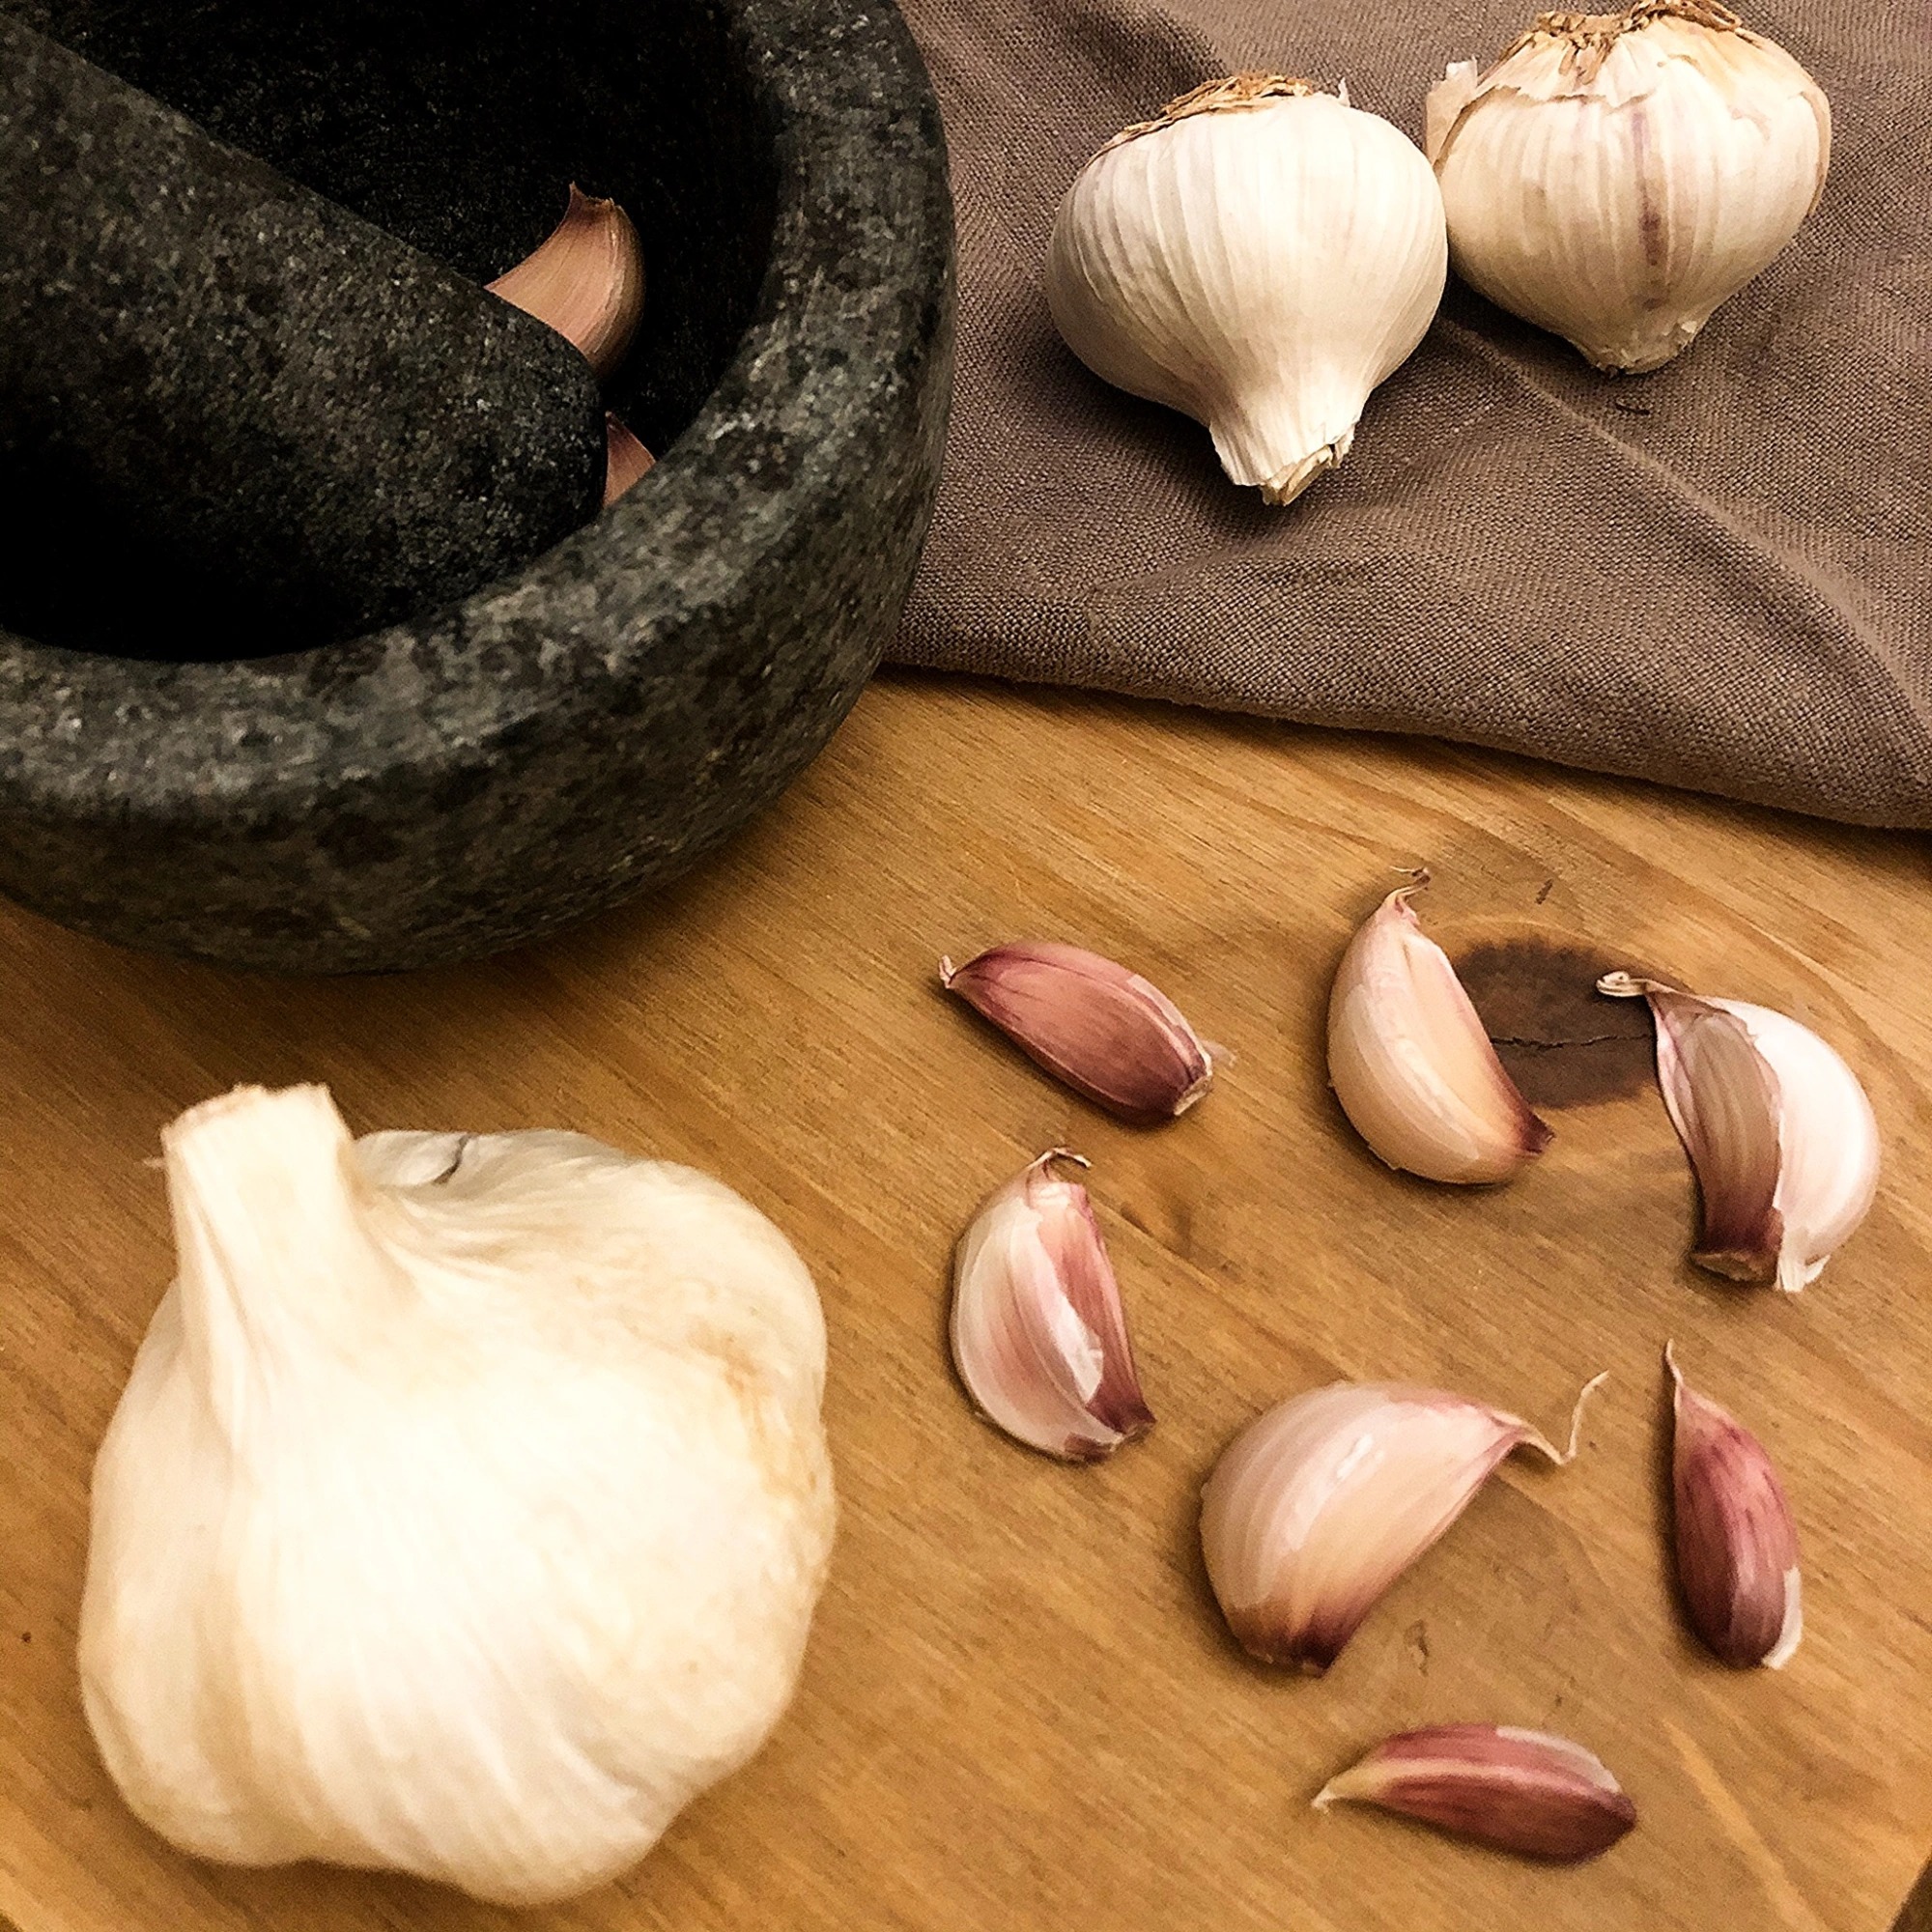 Natural remedies with garlic